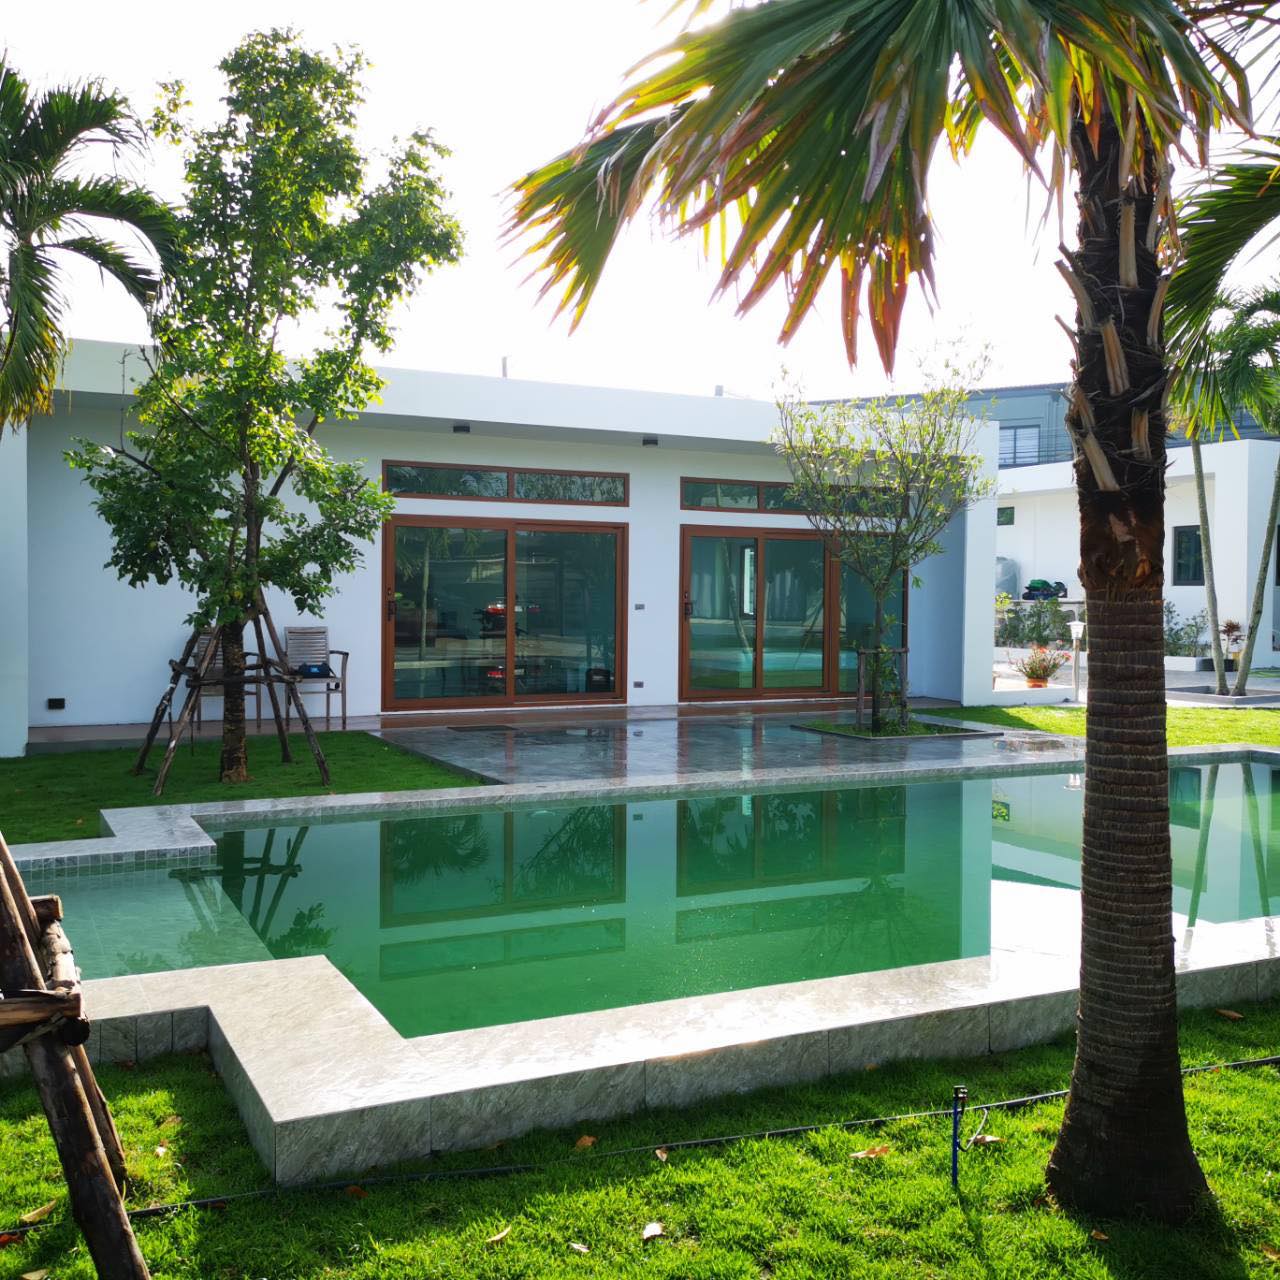 Modern style house in Mabprachan lake area. Ducky Pool villa